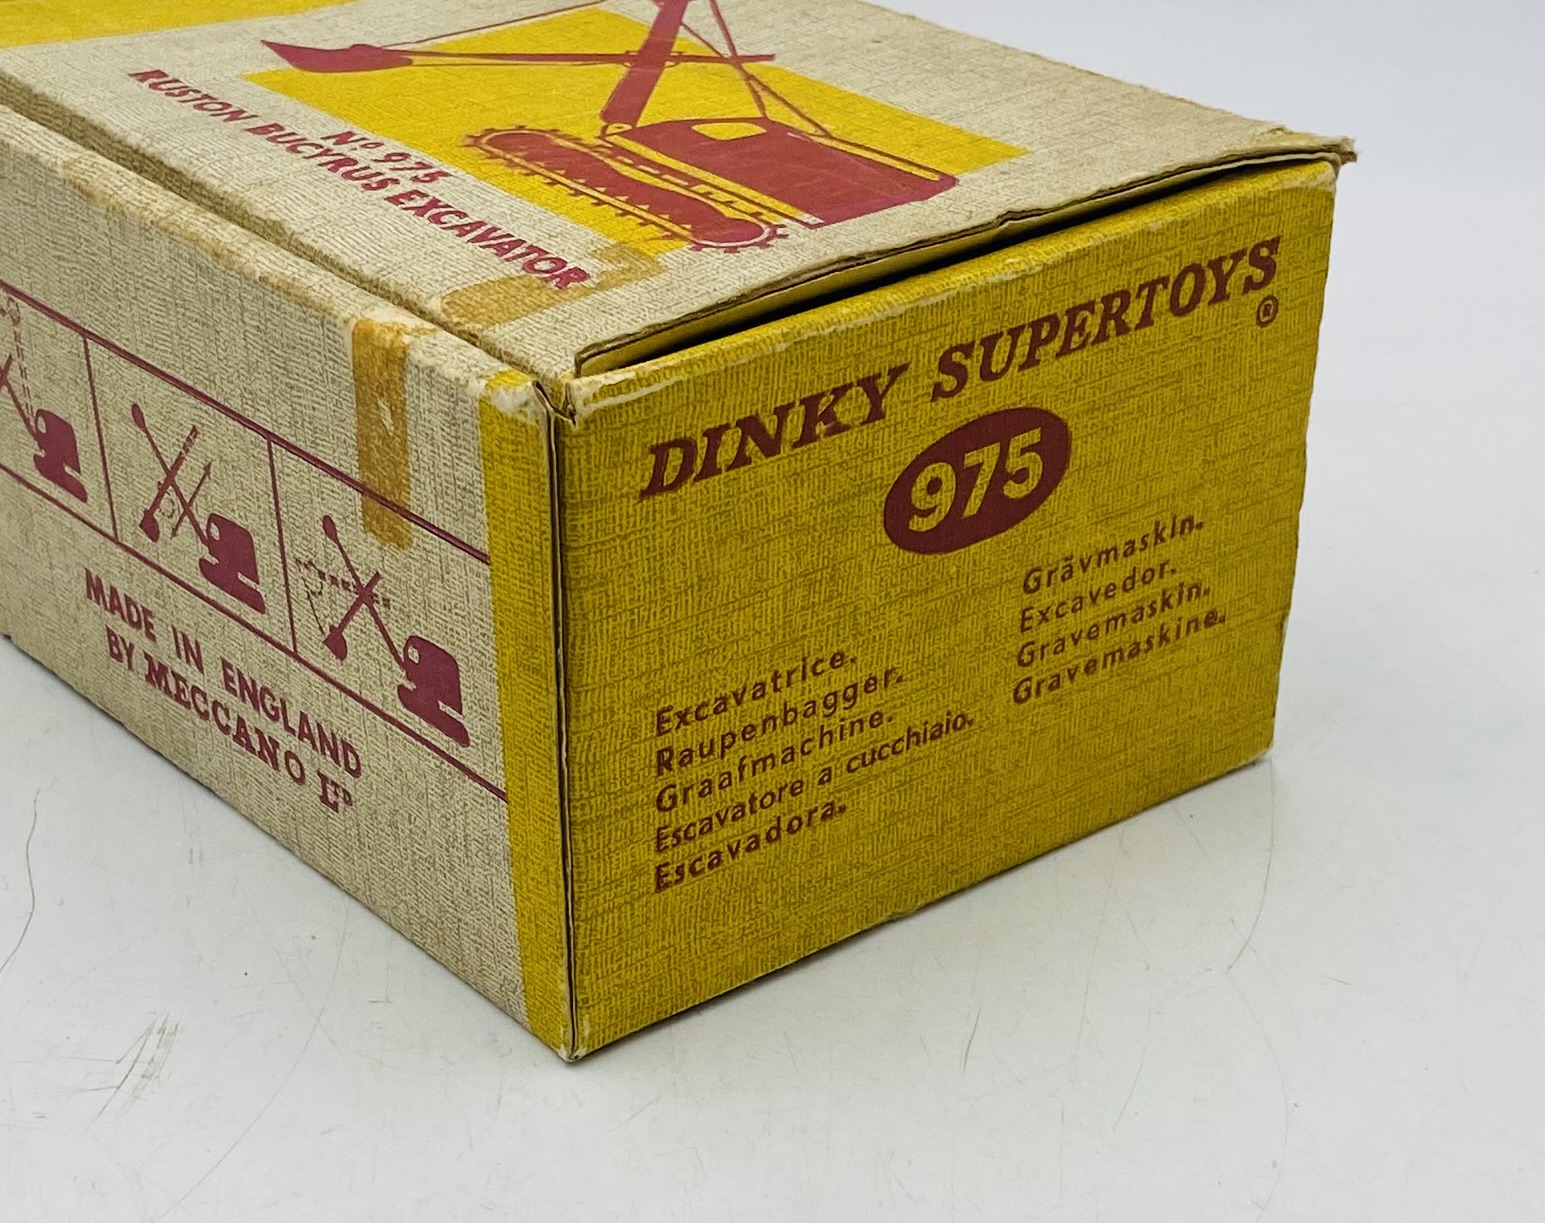 A vintage boxed Dinky Supertoys "Ruston Bucyrus Excavator" die-cast model (No 975) - original tracks - Image 9 of 9